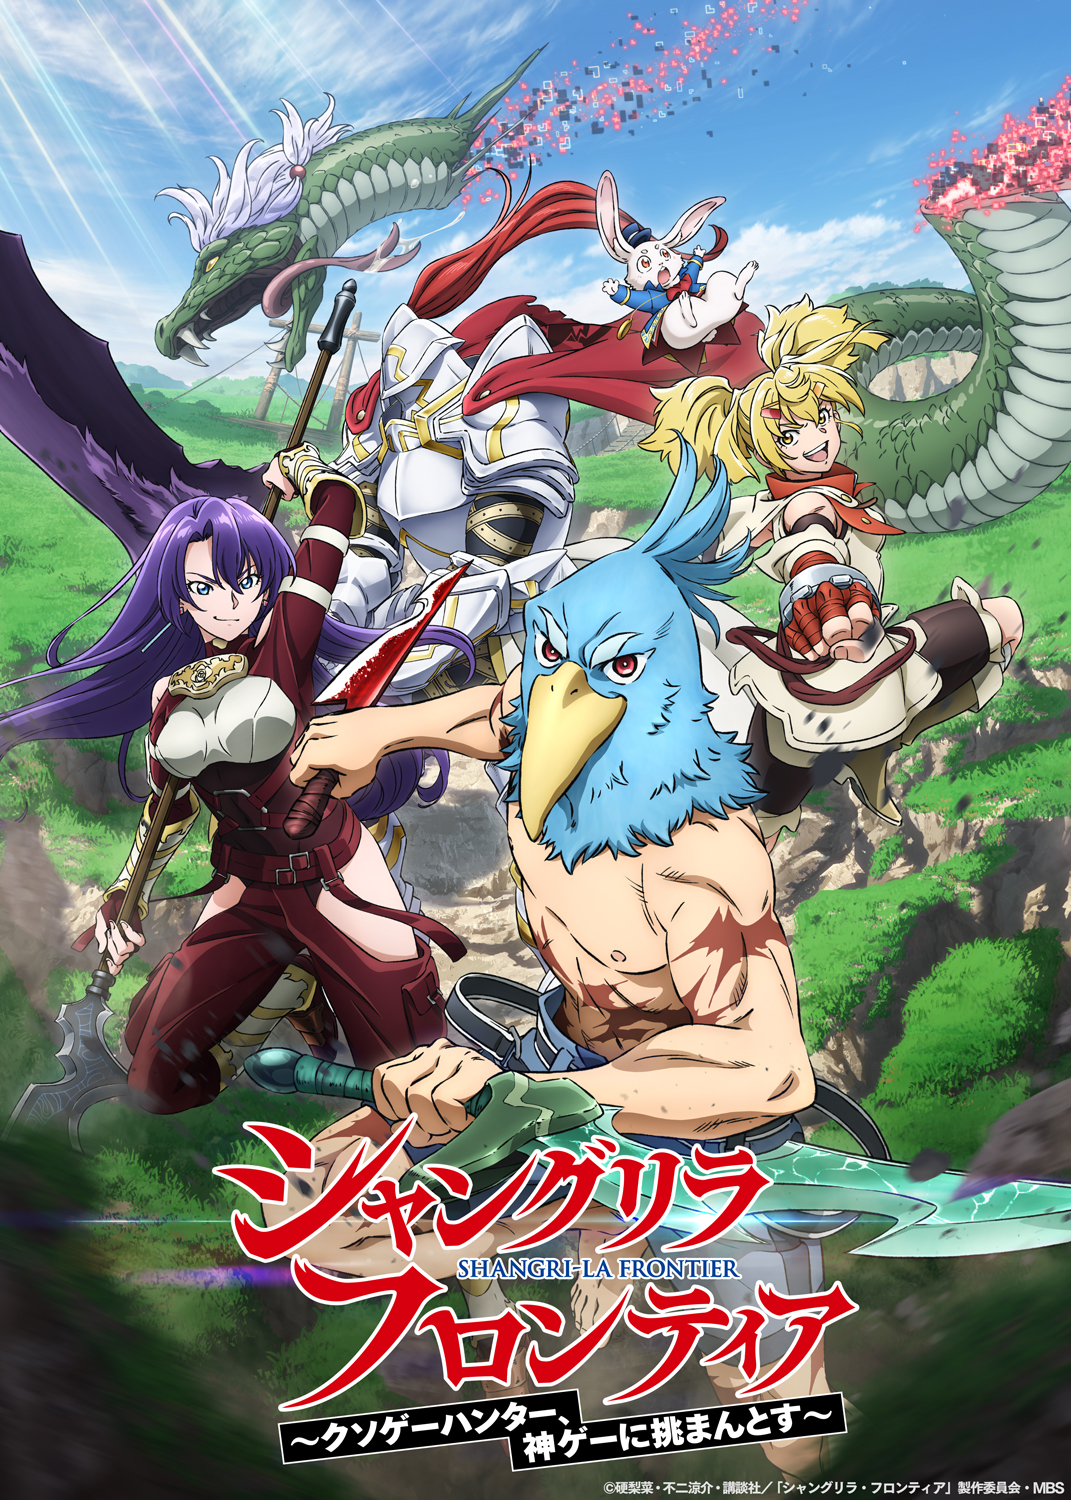 shangri-la frontier anime visual release date